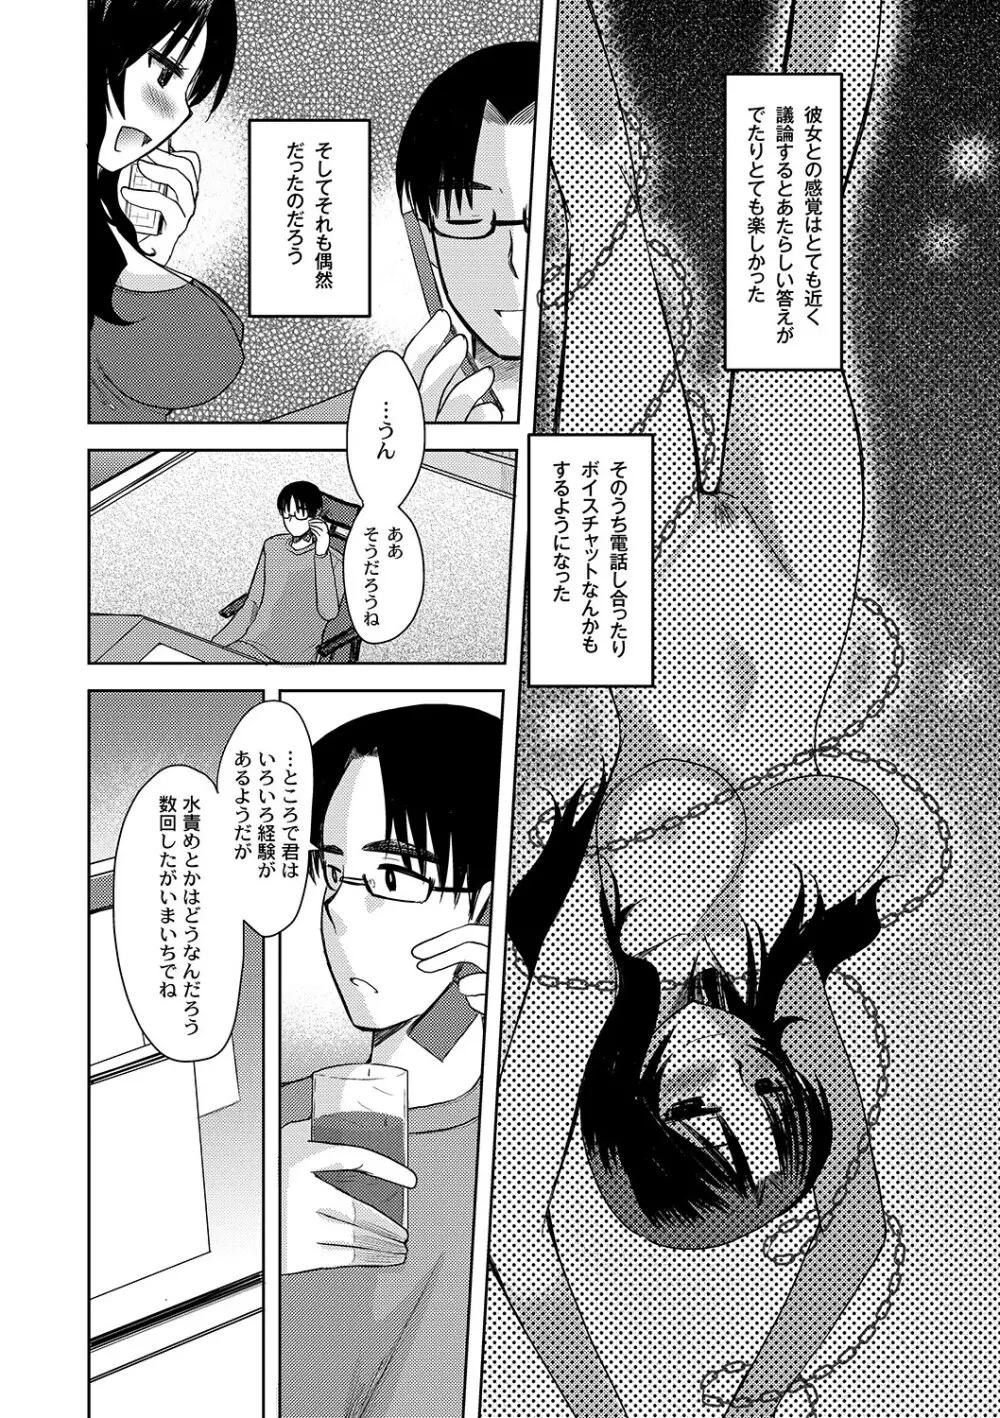 Zetsubo no kubiwa Ch.1-3 4ページ